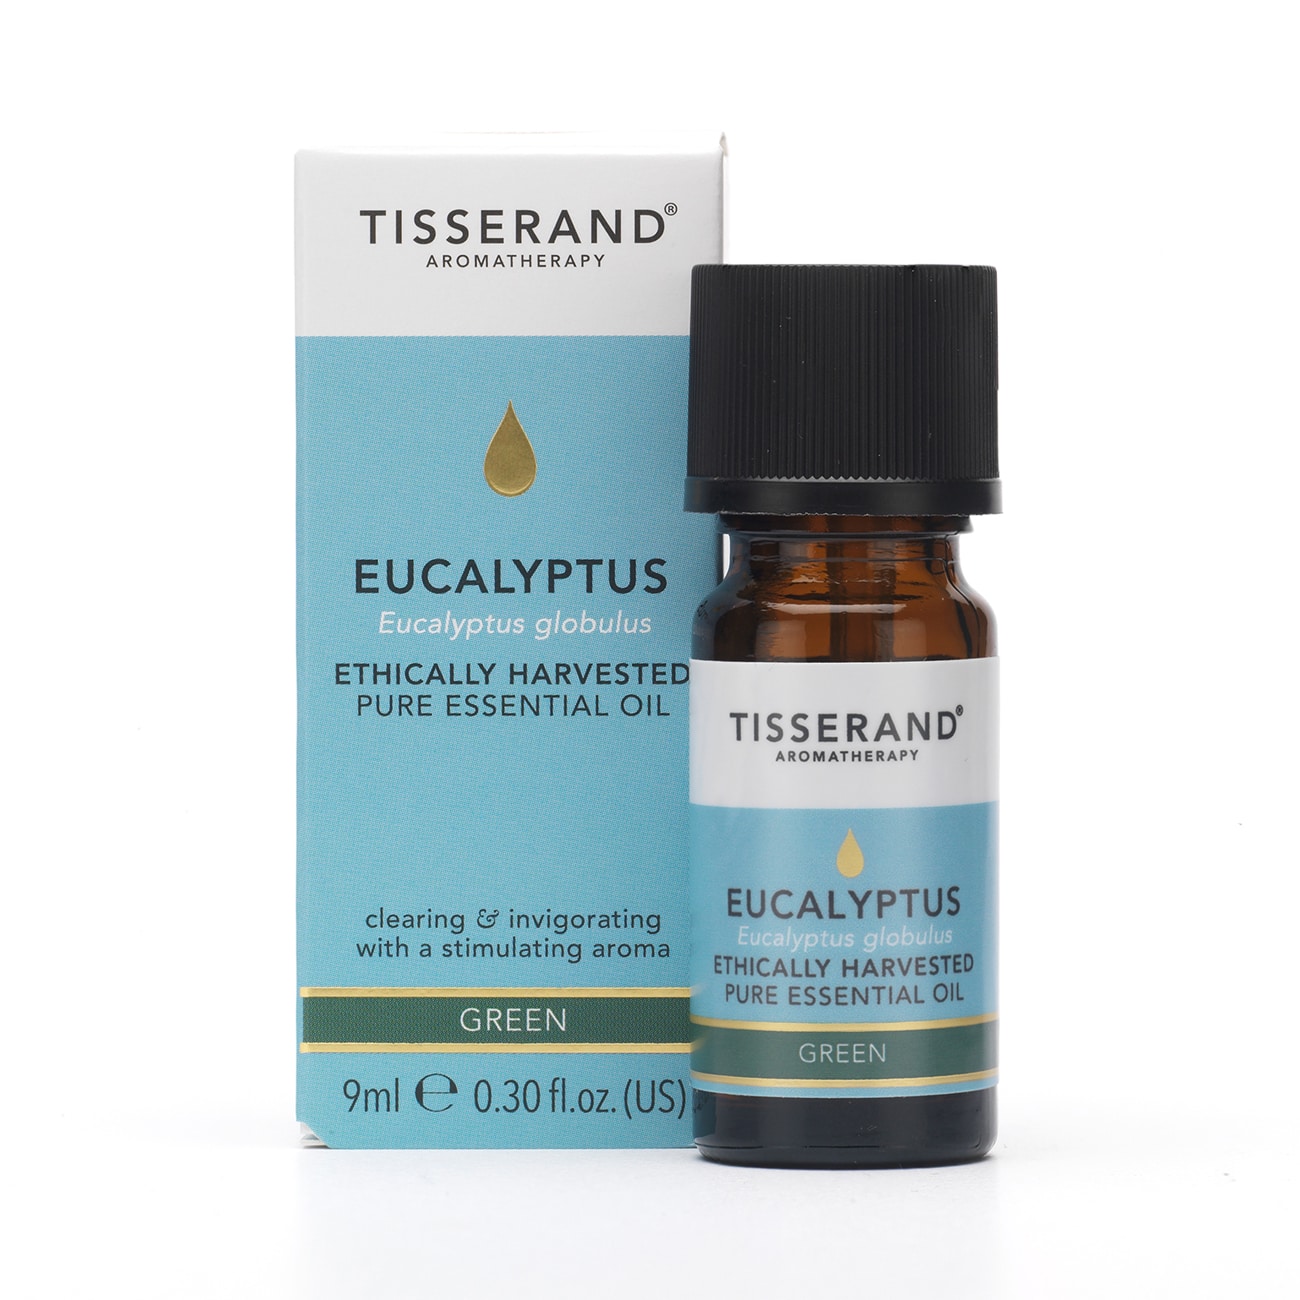 Tisserand Aromatherapy Eucalyptus Ethically Harvested Pure Essential Oil